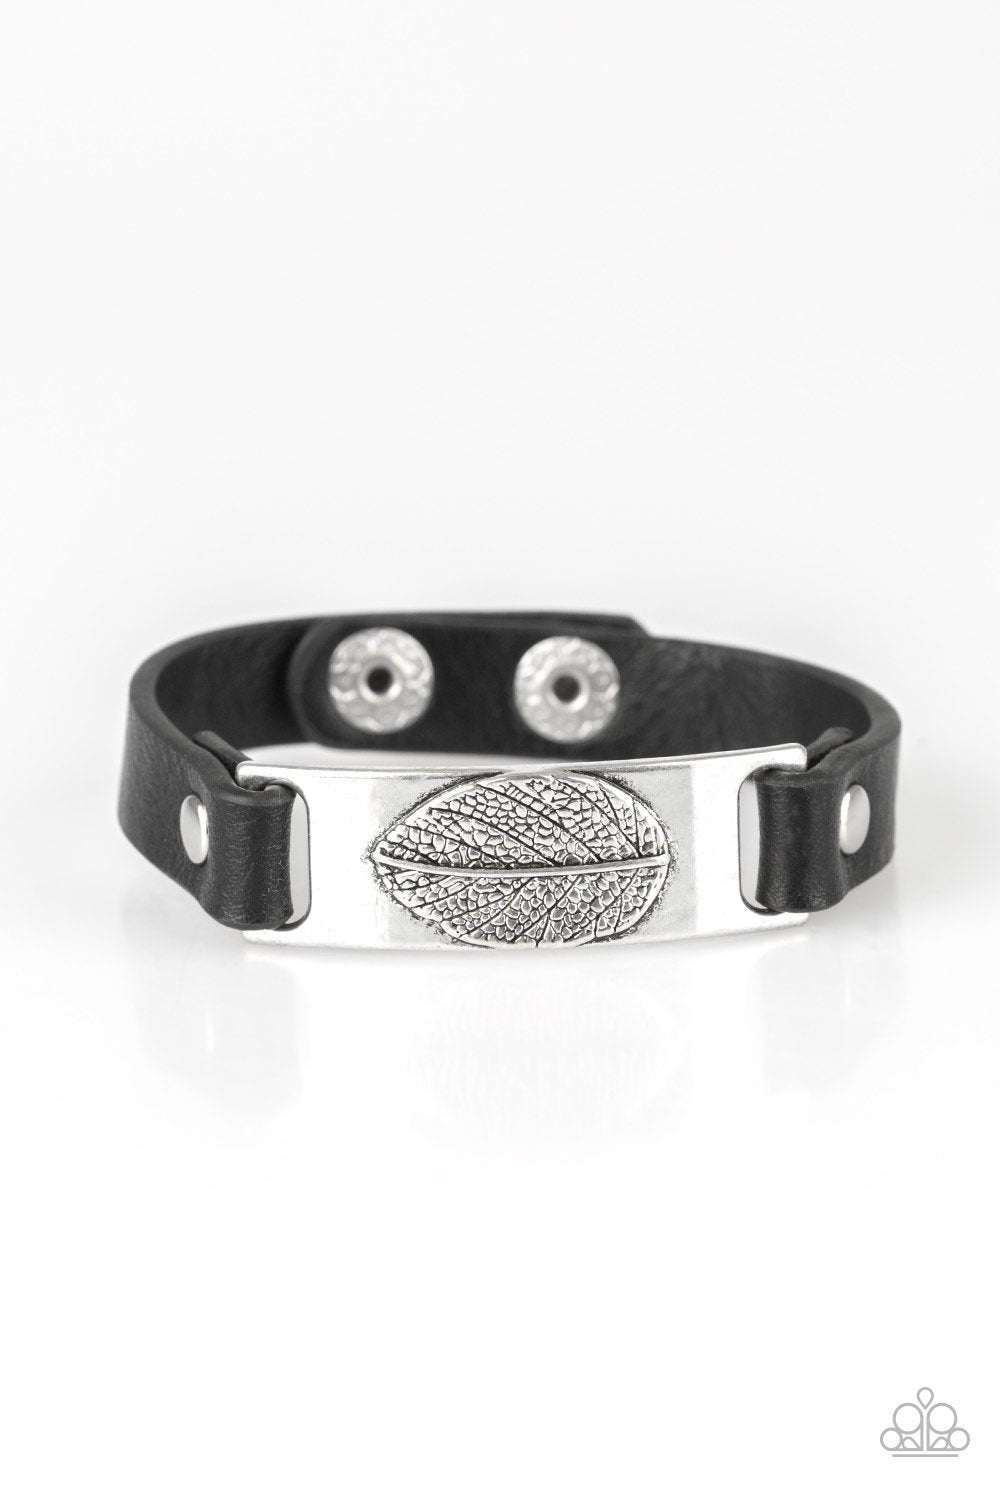 Take the LEAF Black Leather Wrap Snap Bracelet - Paparazzi Accessories-CarasShop.com - $5 Jewelry by Cara Jewels